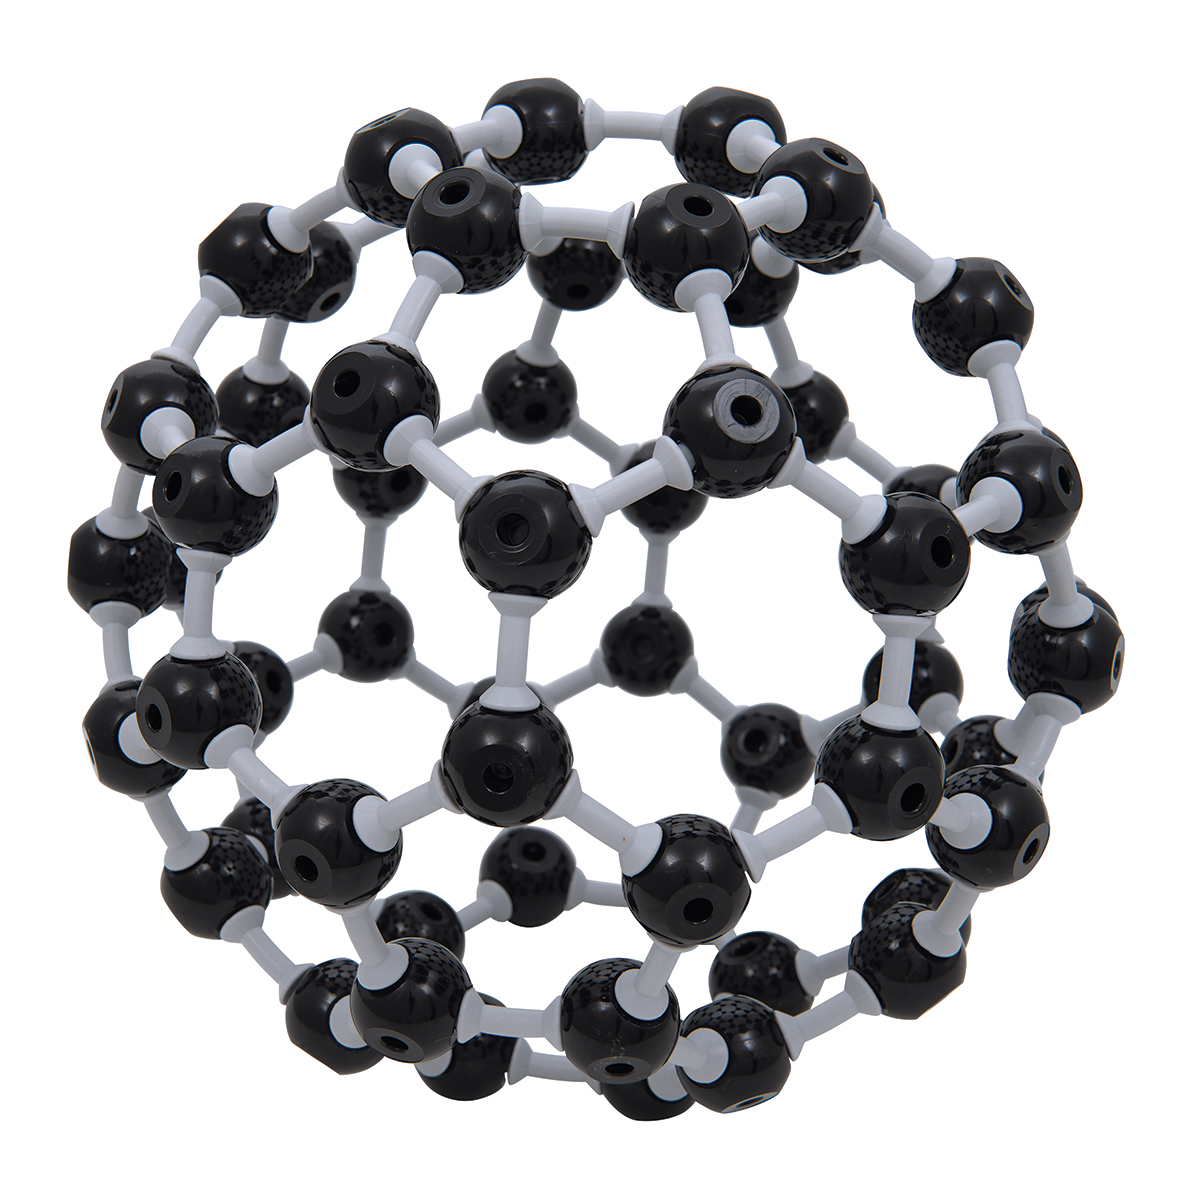 Educational Scientific Chemistry Model Carbon Atom Structure C60 Molecular Model 